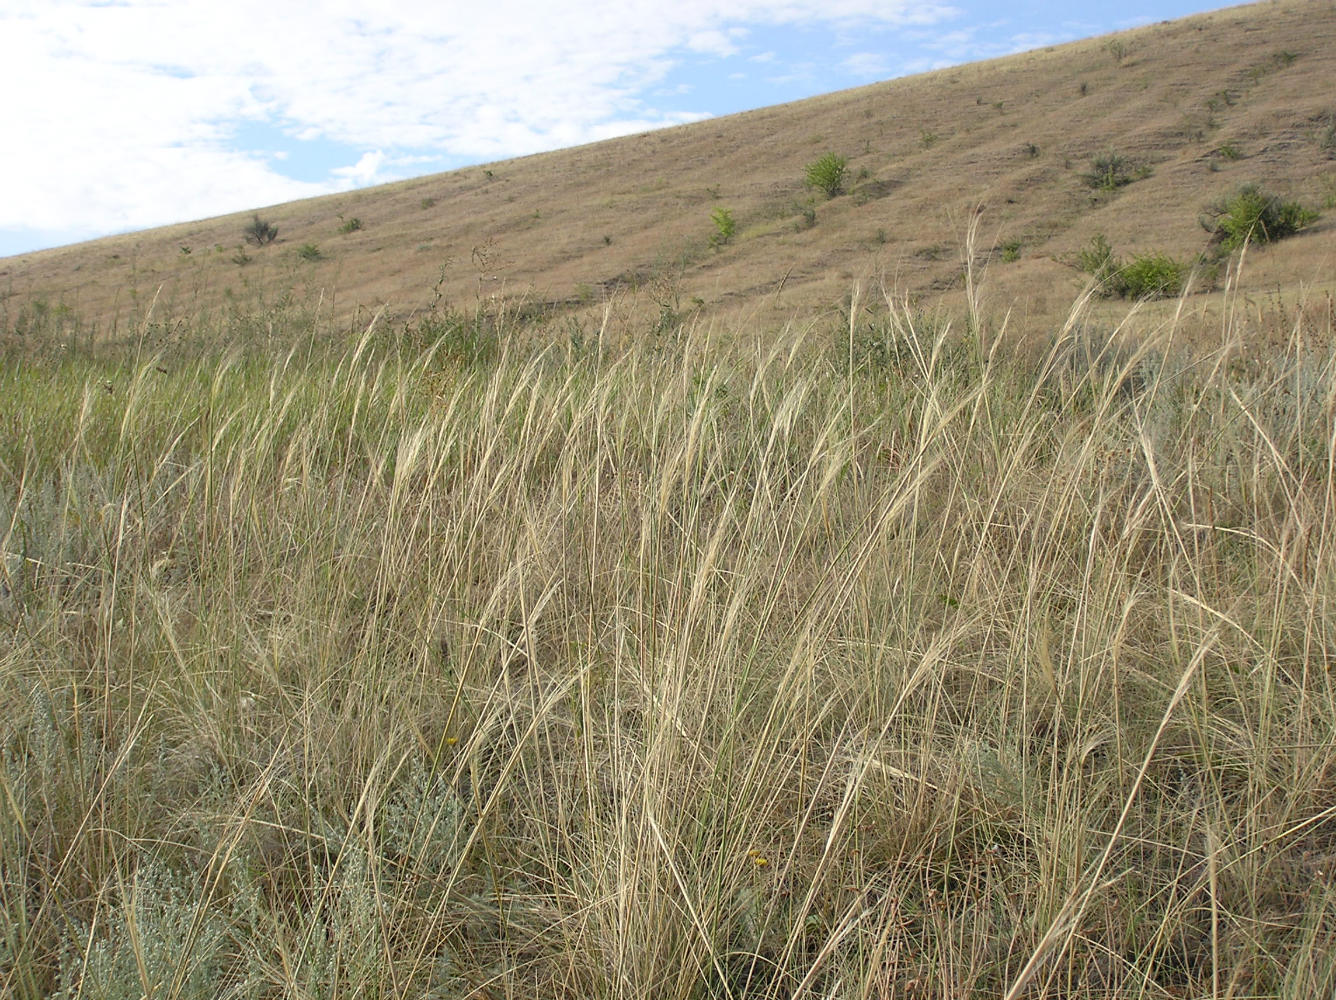 Буданова Гора, image of landscape/habitat.